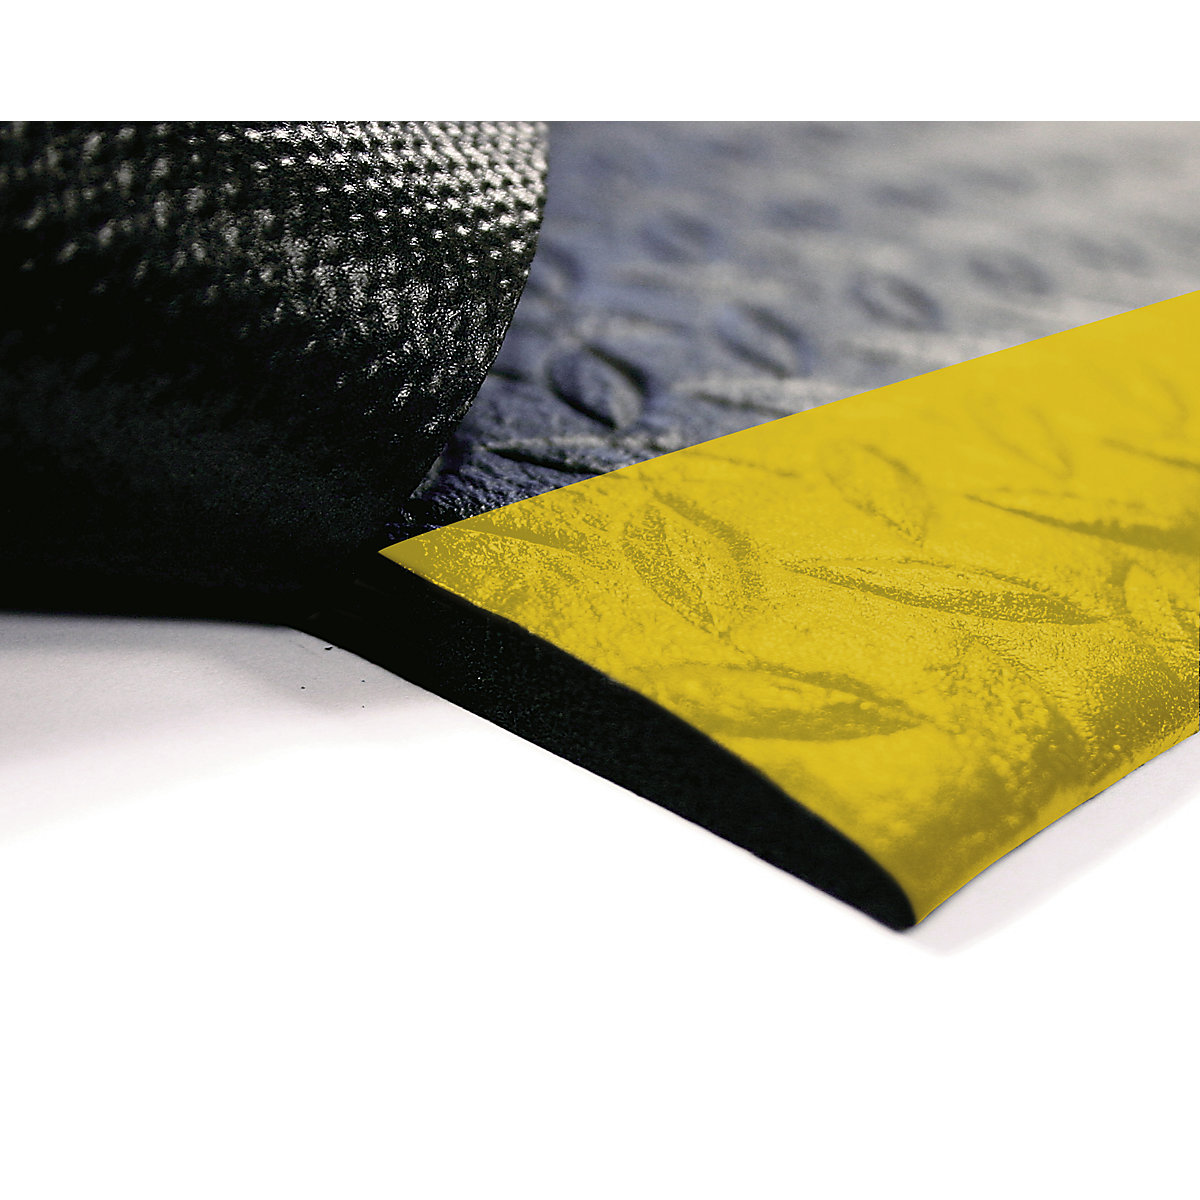 Orthomat® Diamond anti-fatigue matting (Product illustration 4)